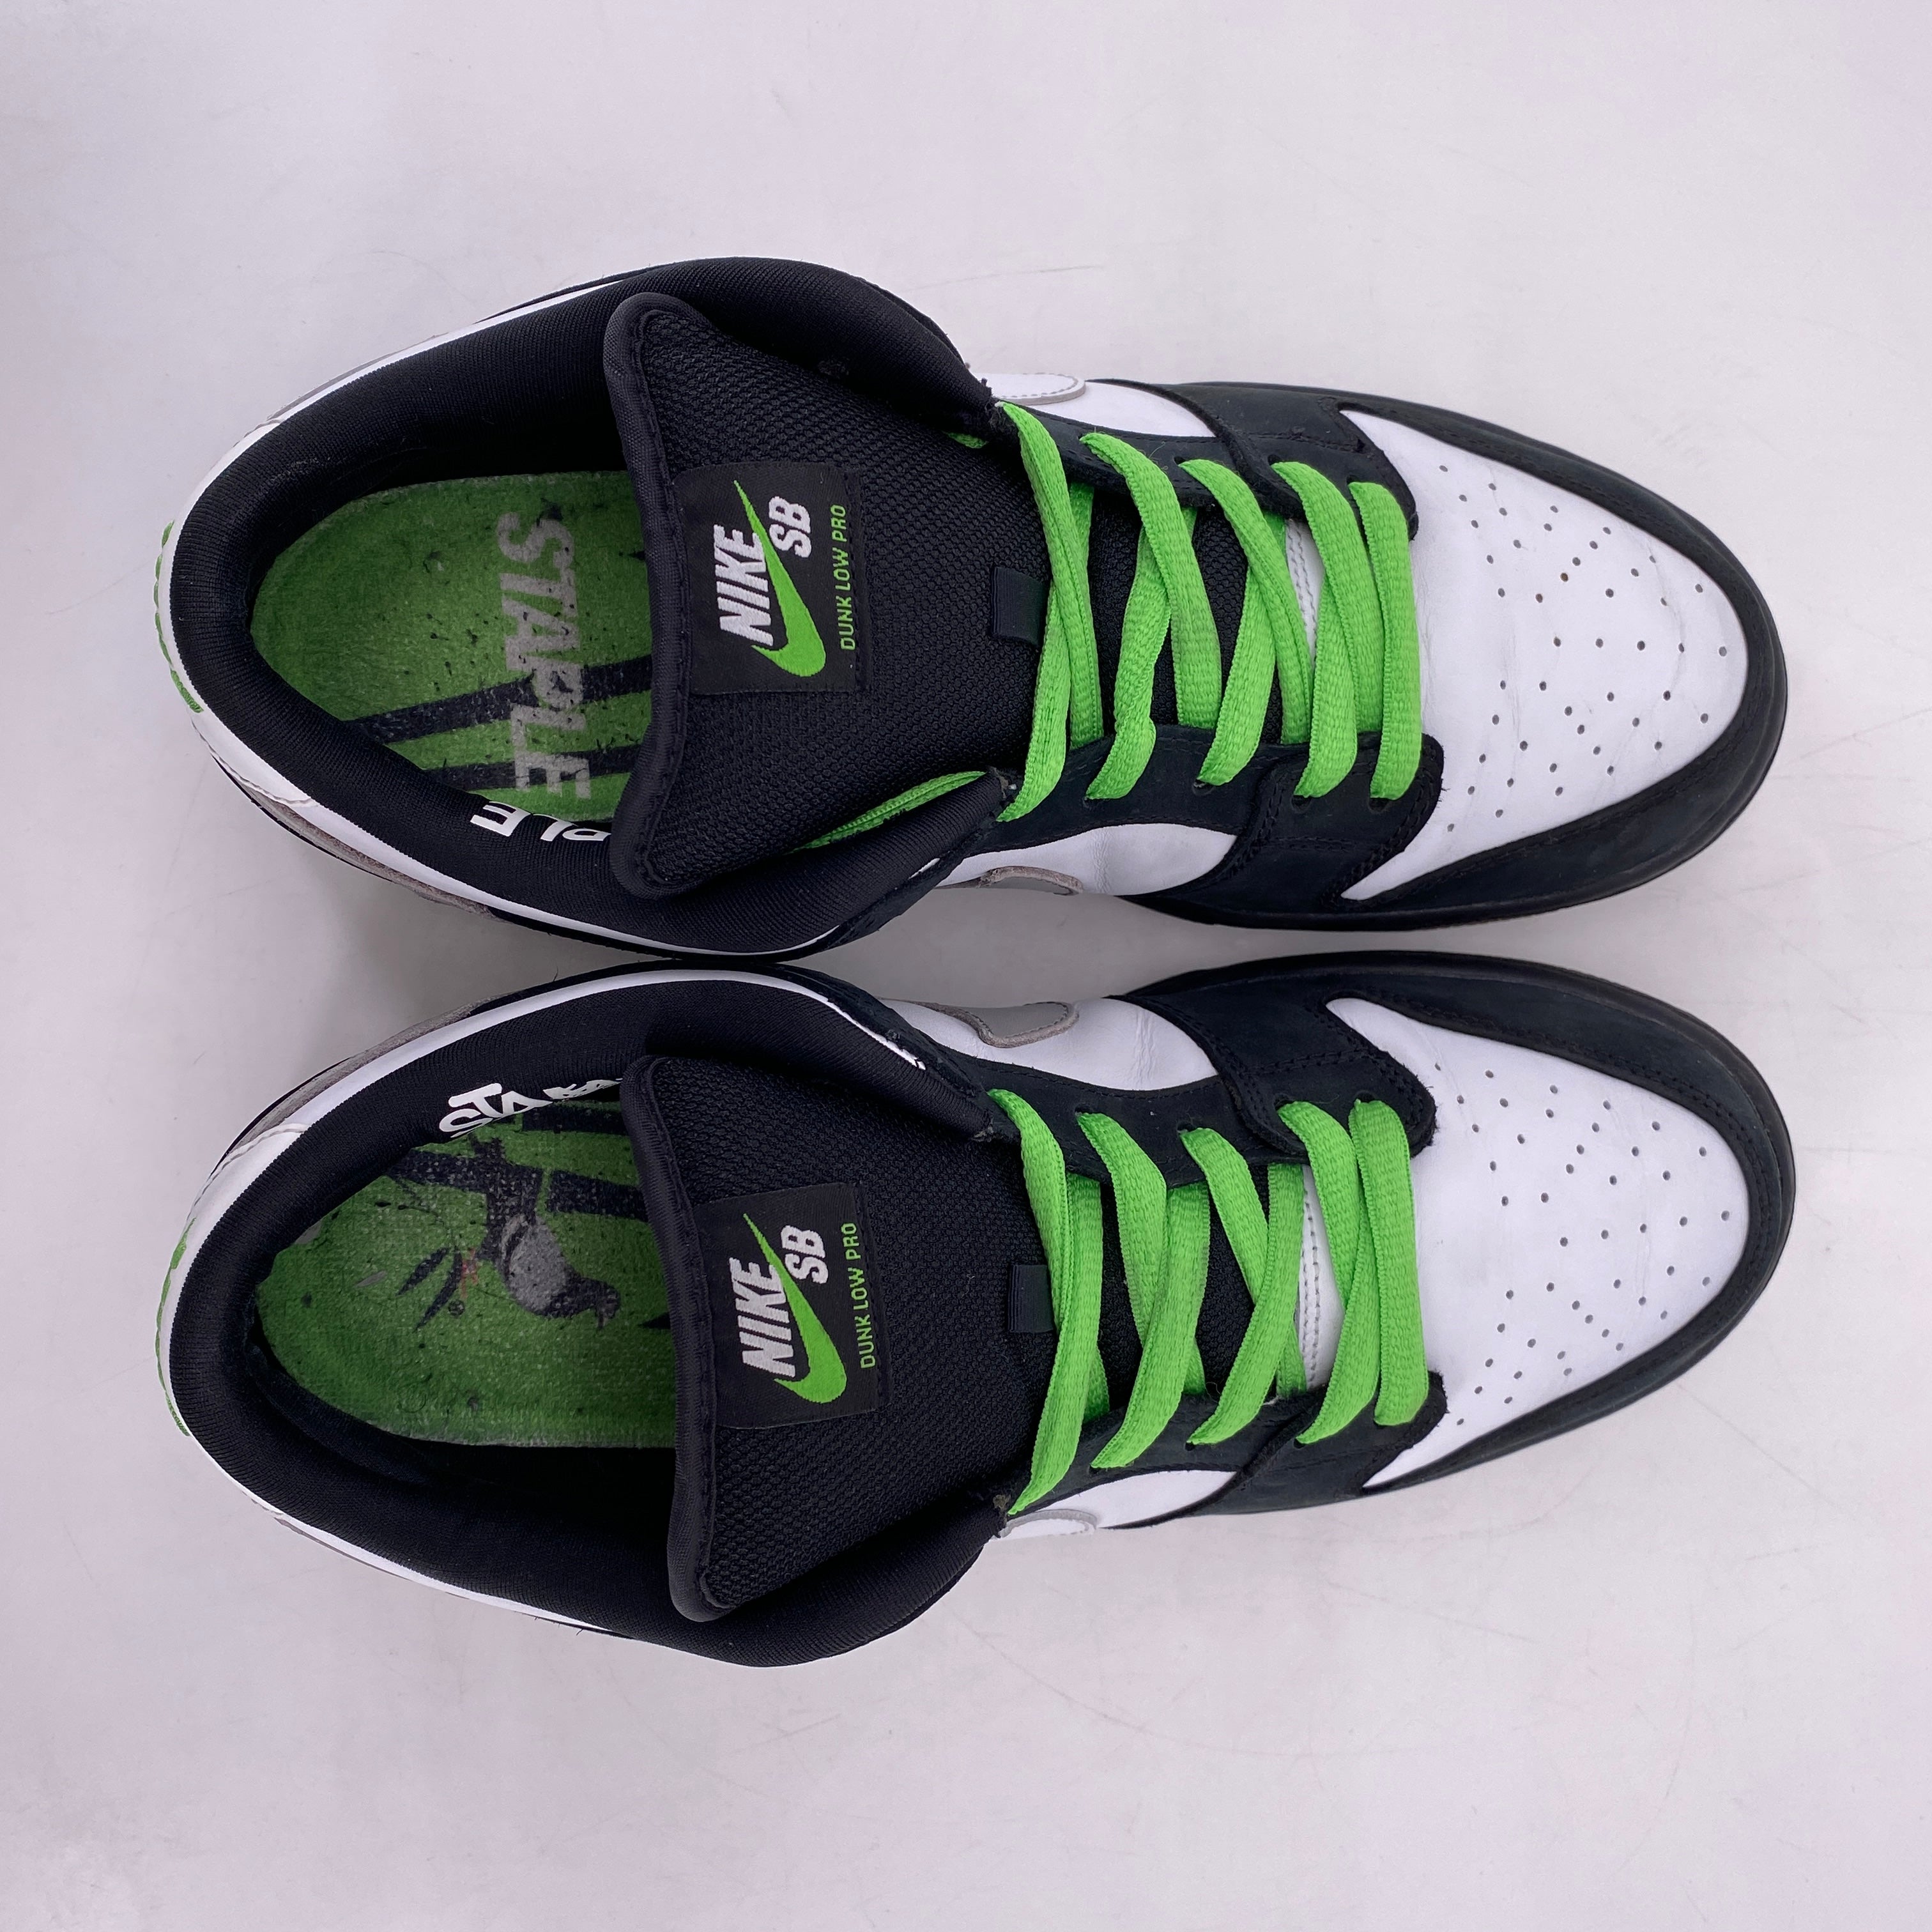 Nike SB Dunk Low "Staple Panda Pigeon" 2019 Used Size 11